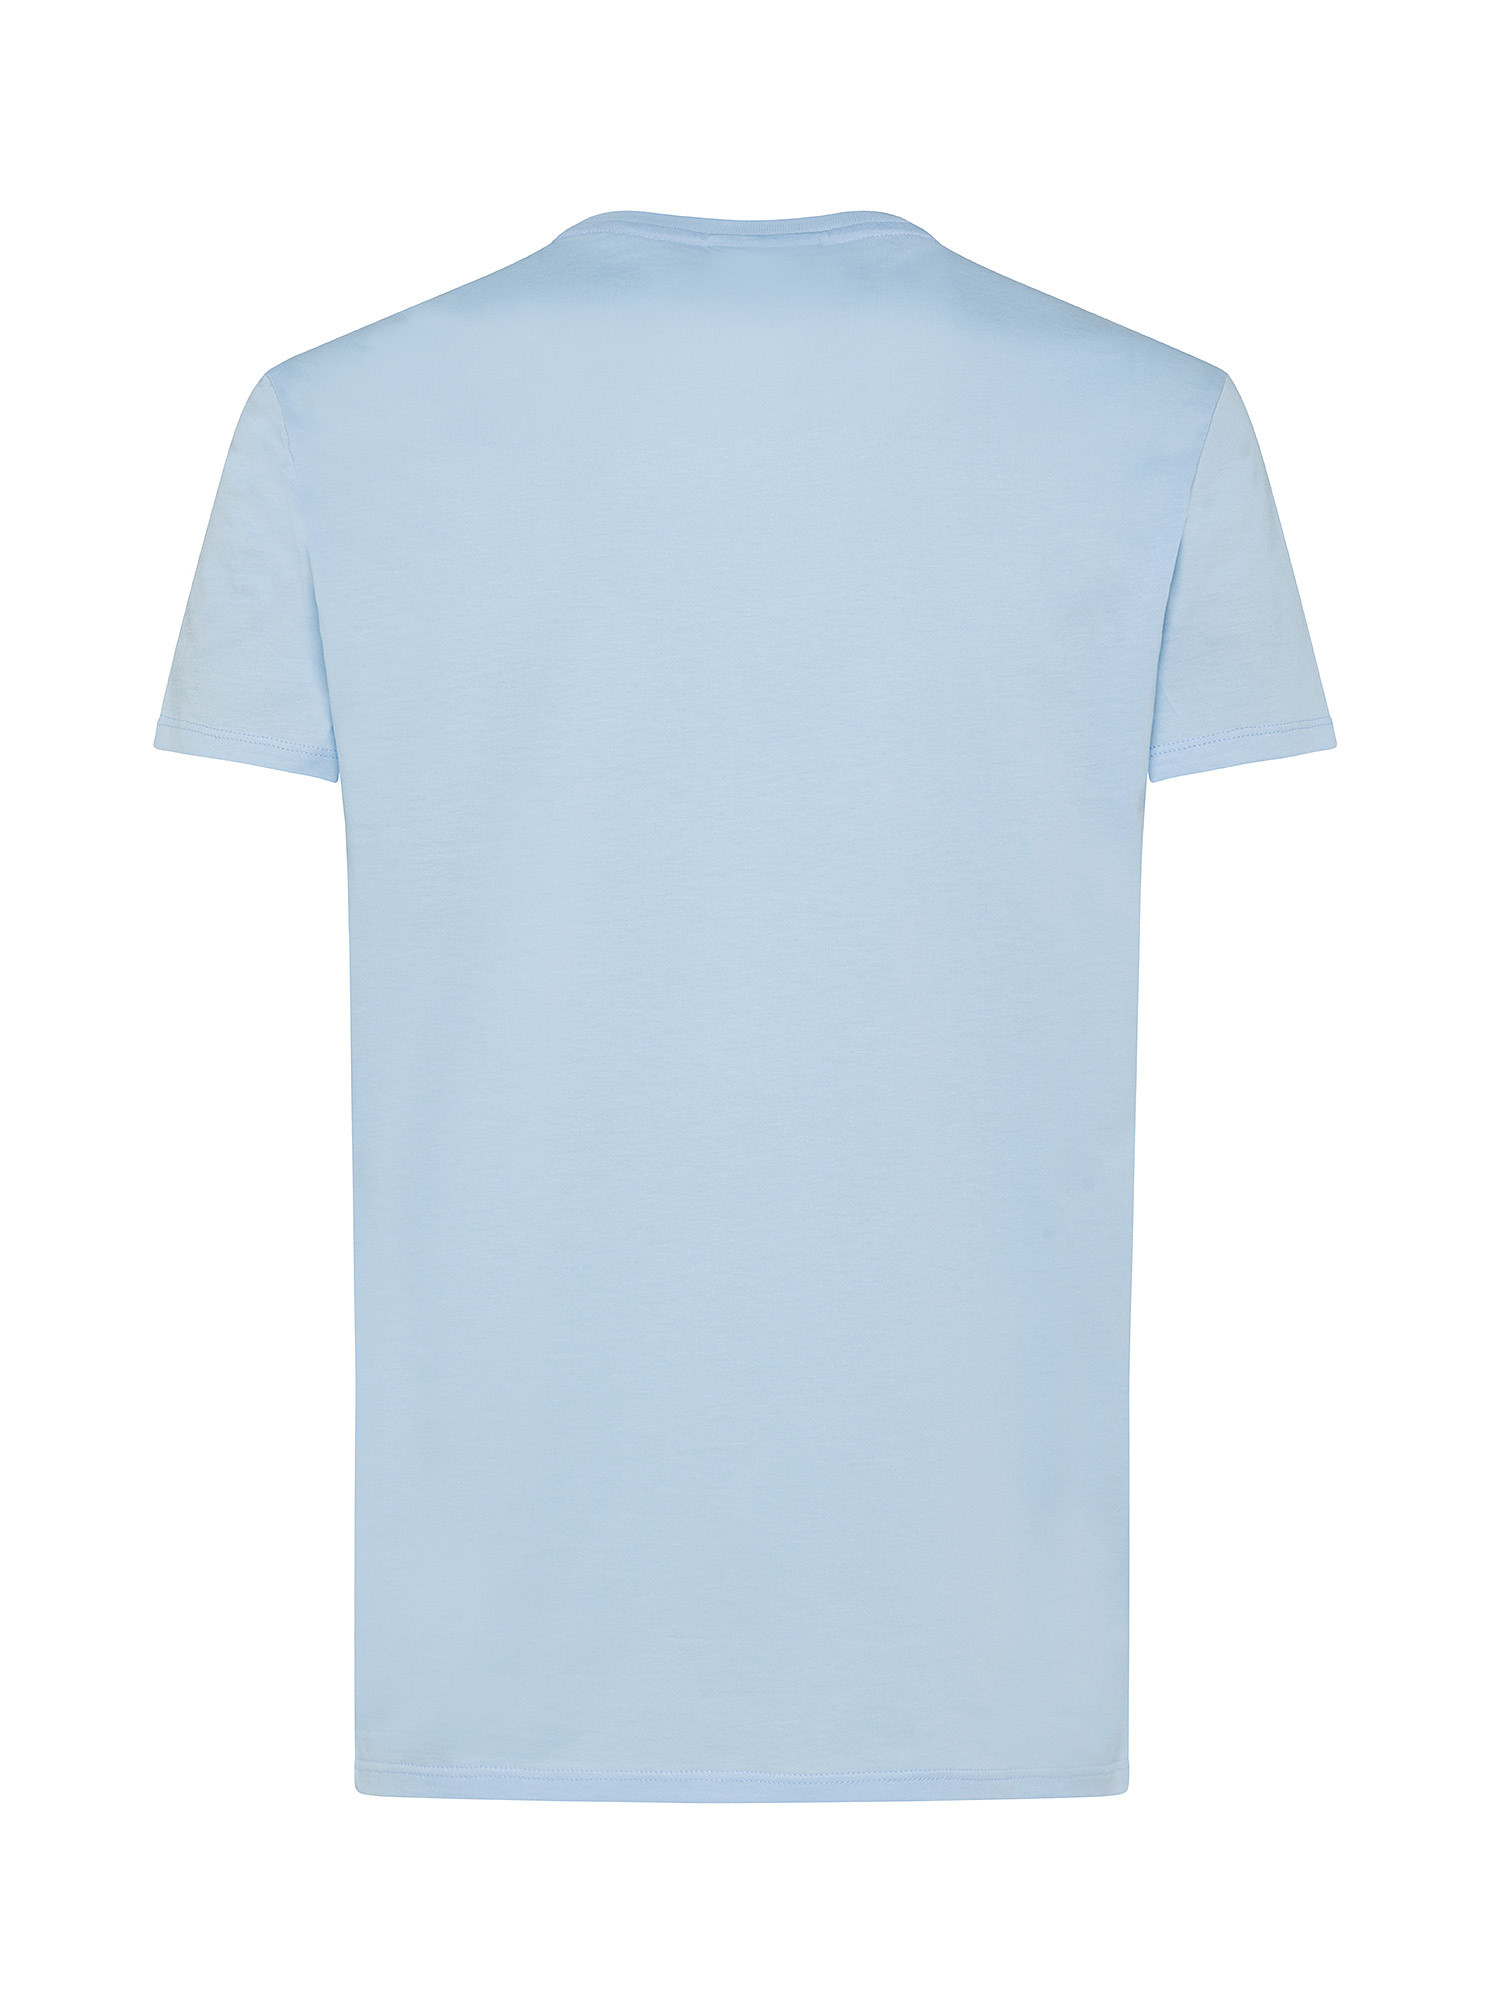 Lacoste - Pima cotton jersey crewneck T-shirt, Light Blue, large image number 1